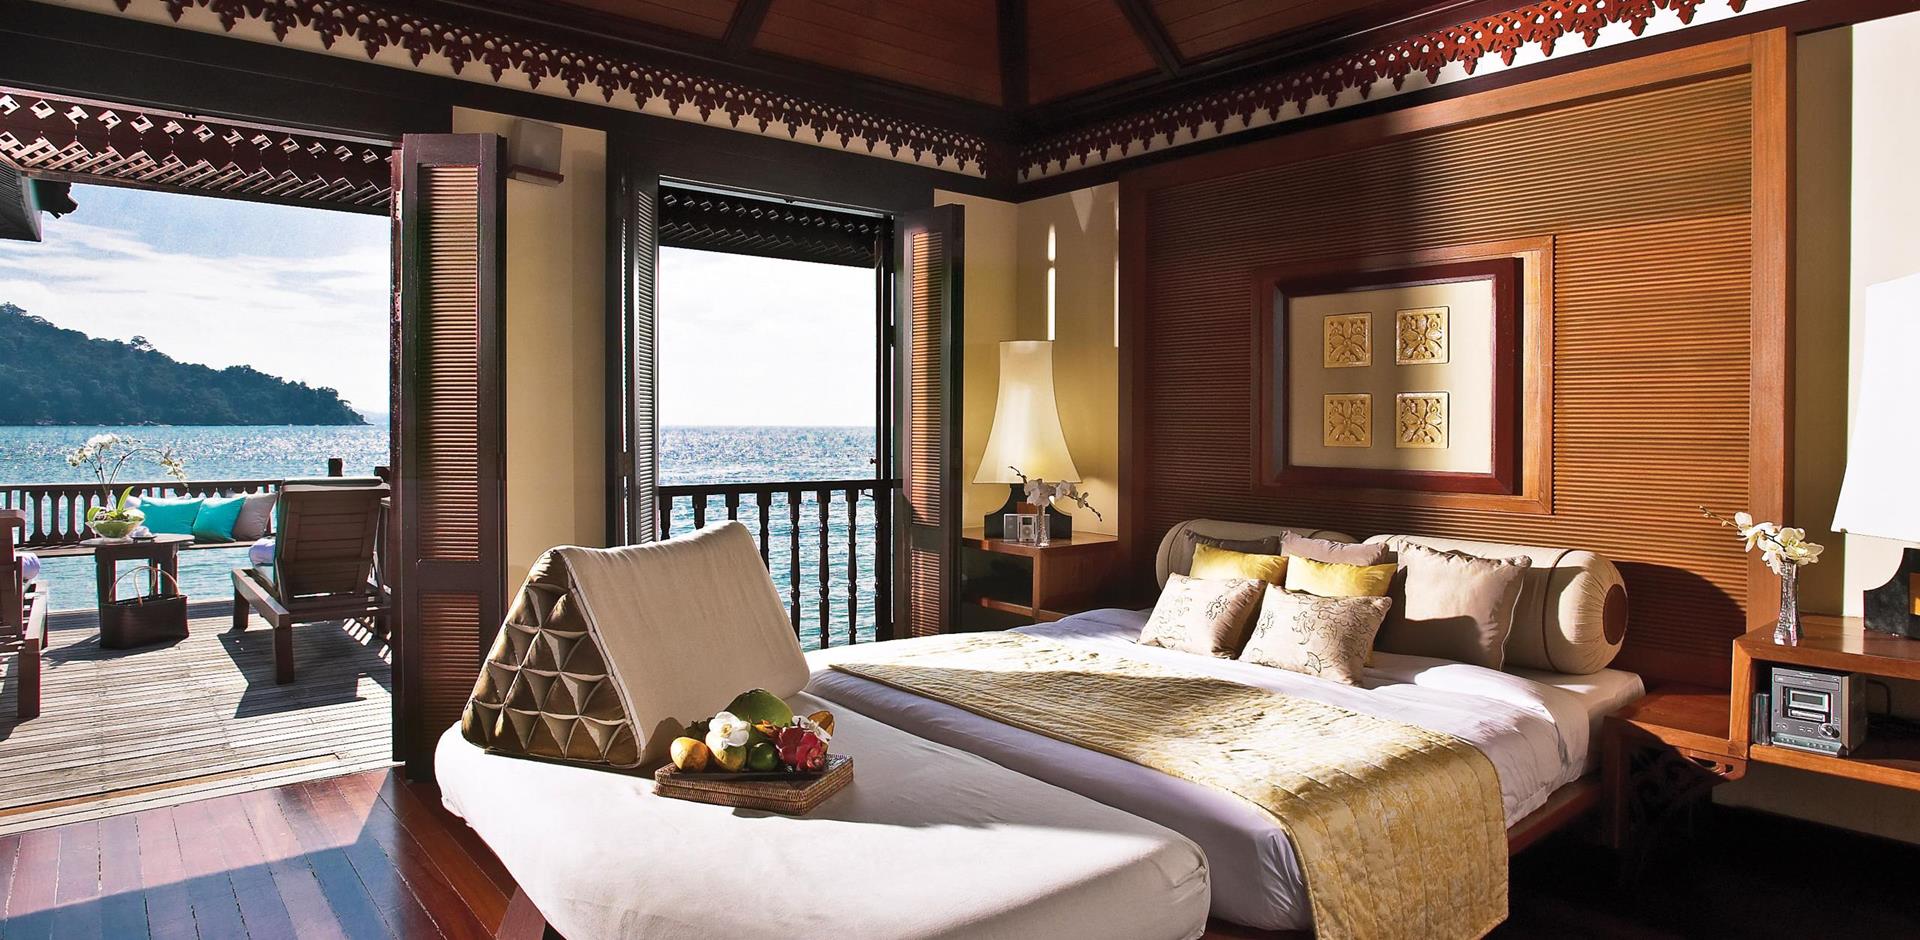 Bedroom with balcony, Pangkor Laut Resort, Malaysia